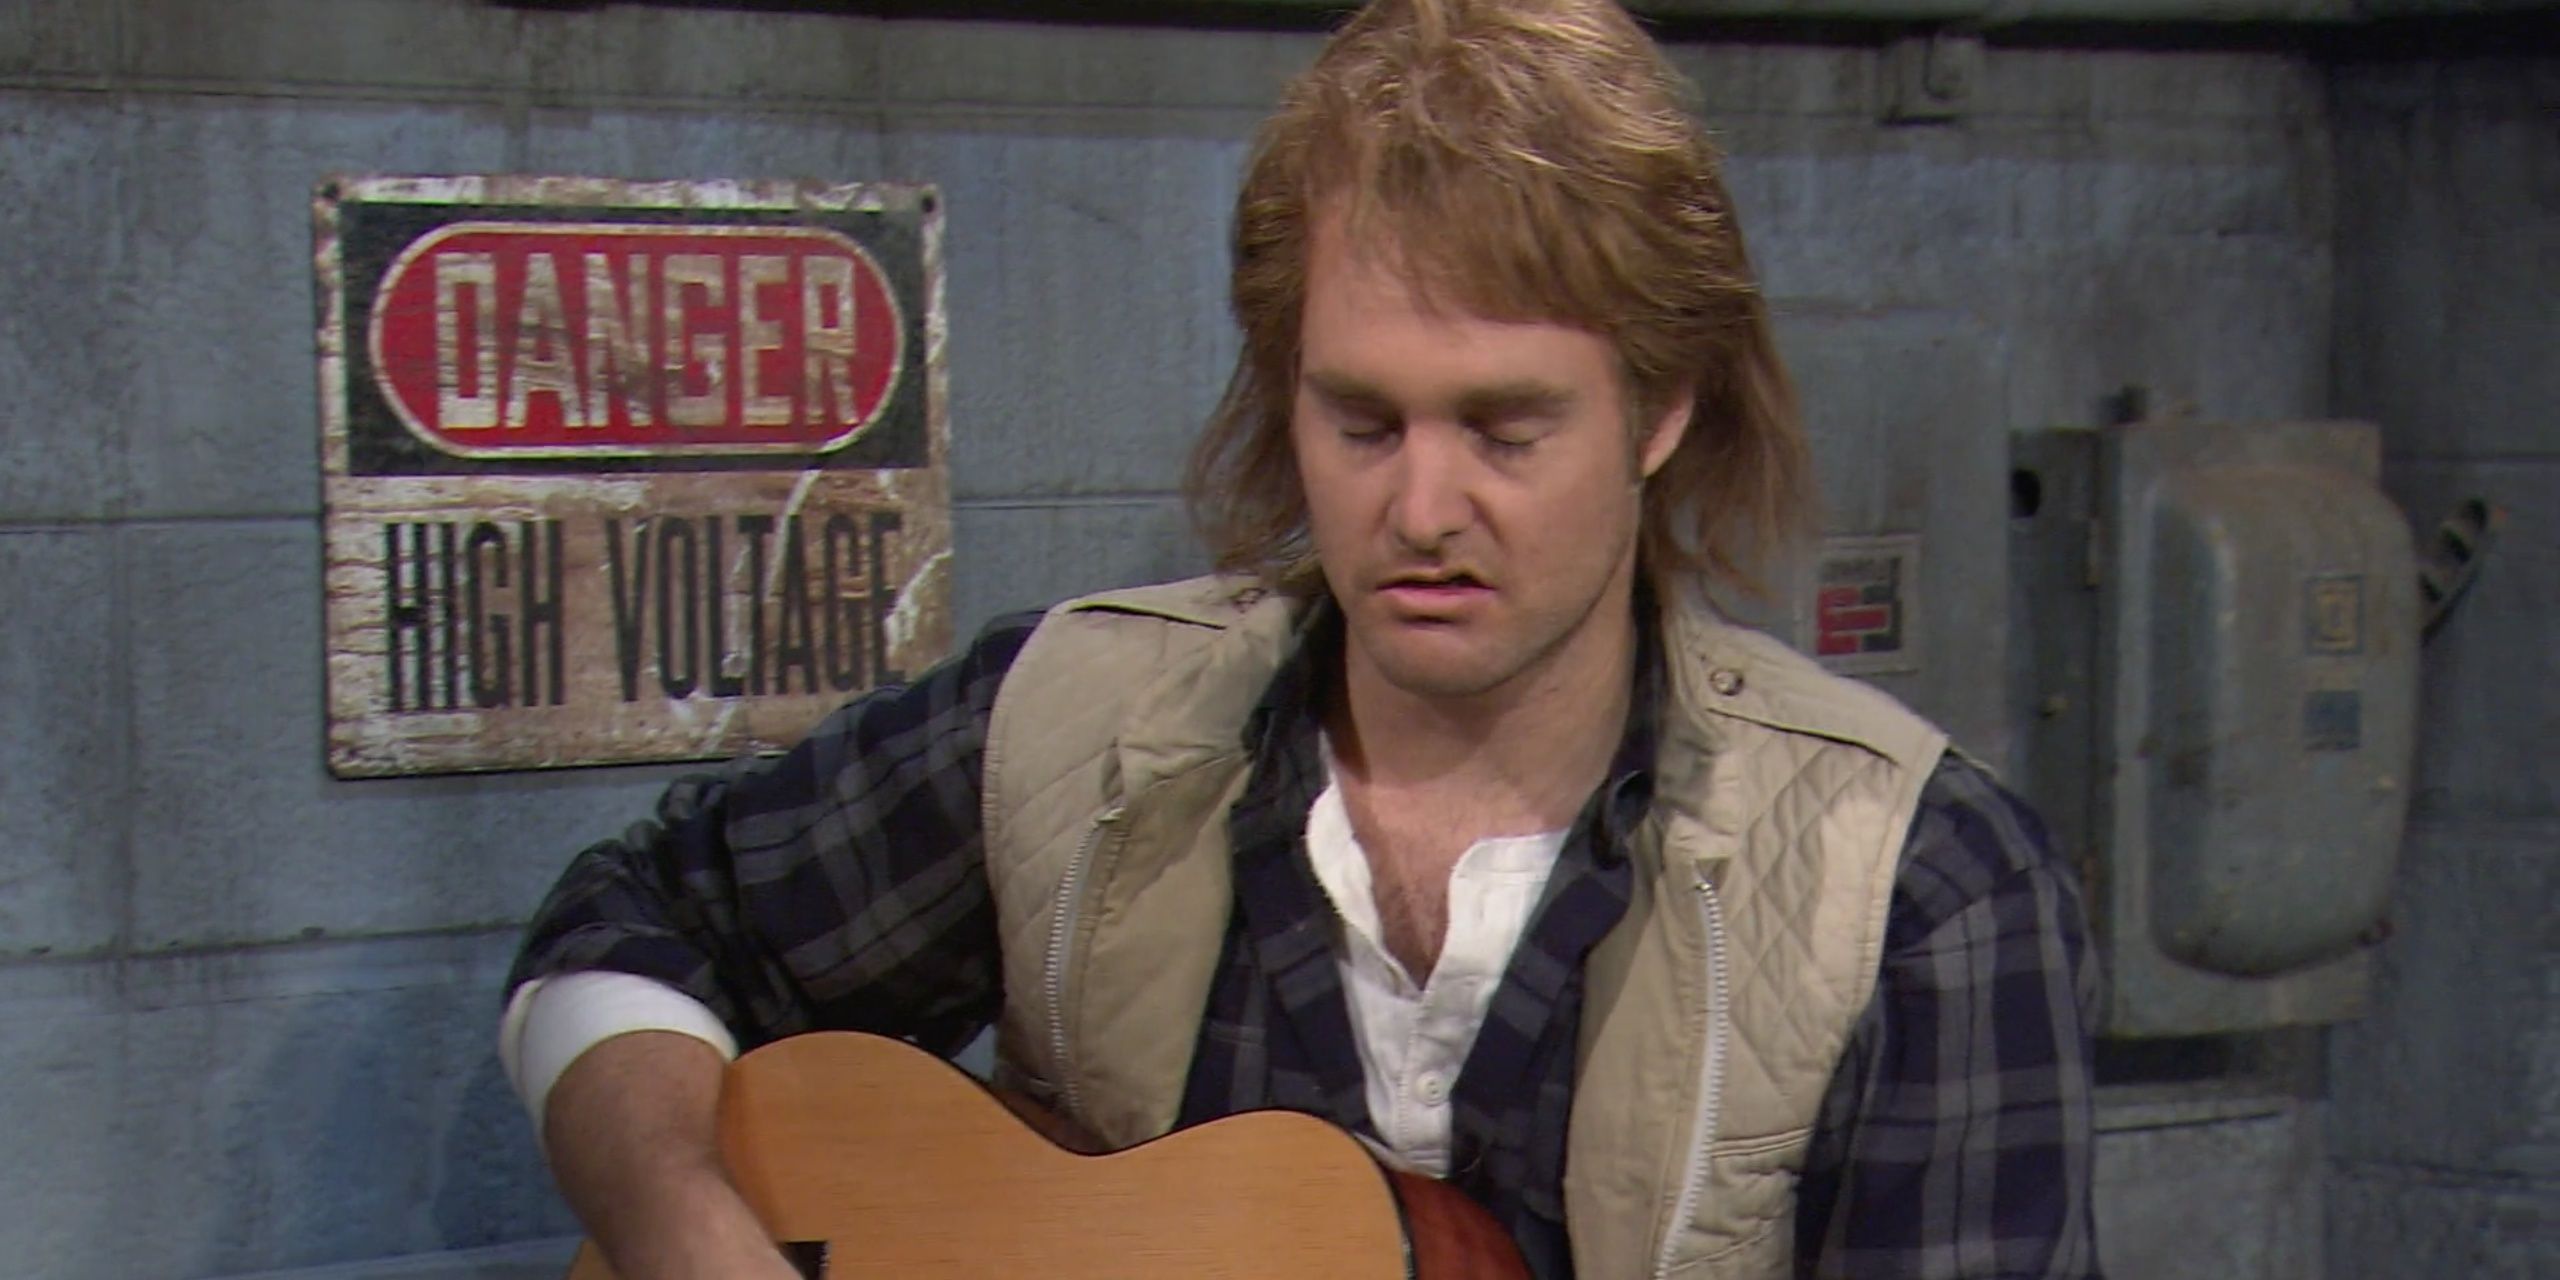 MacGruber drunkenly plays guitar on SNL